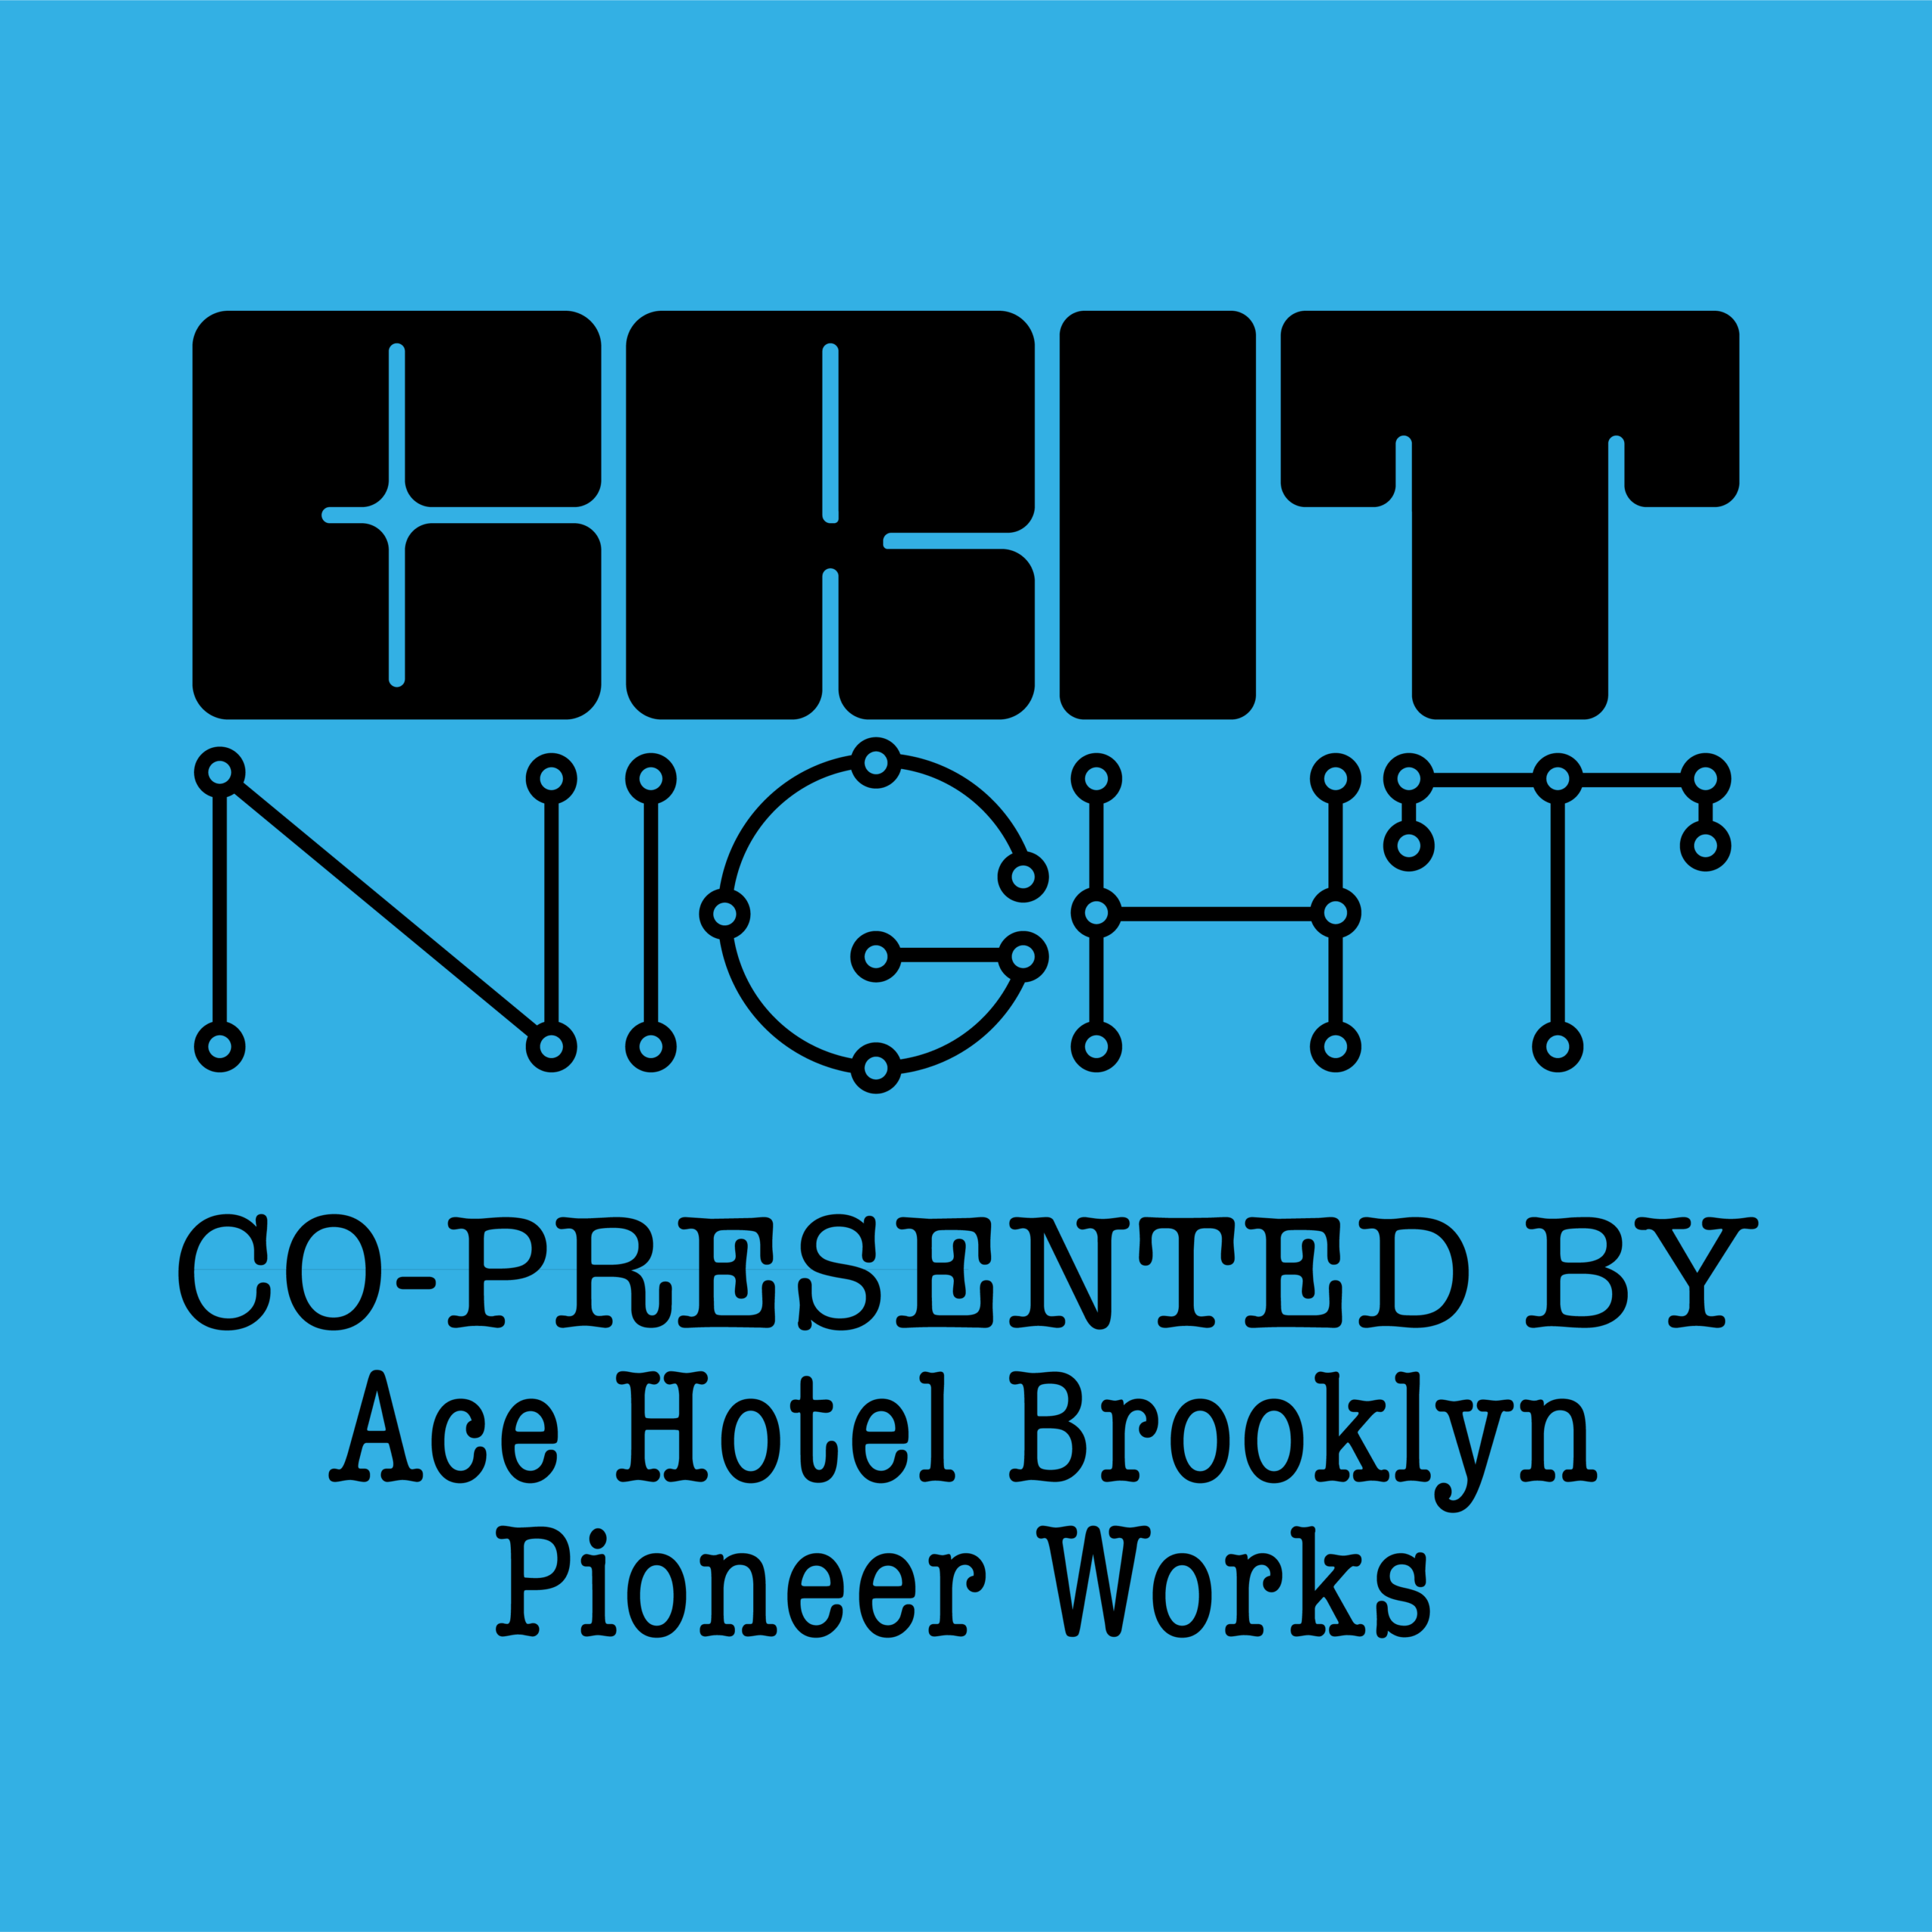 Crit Night event flyer